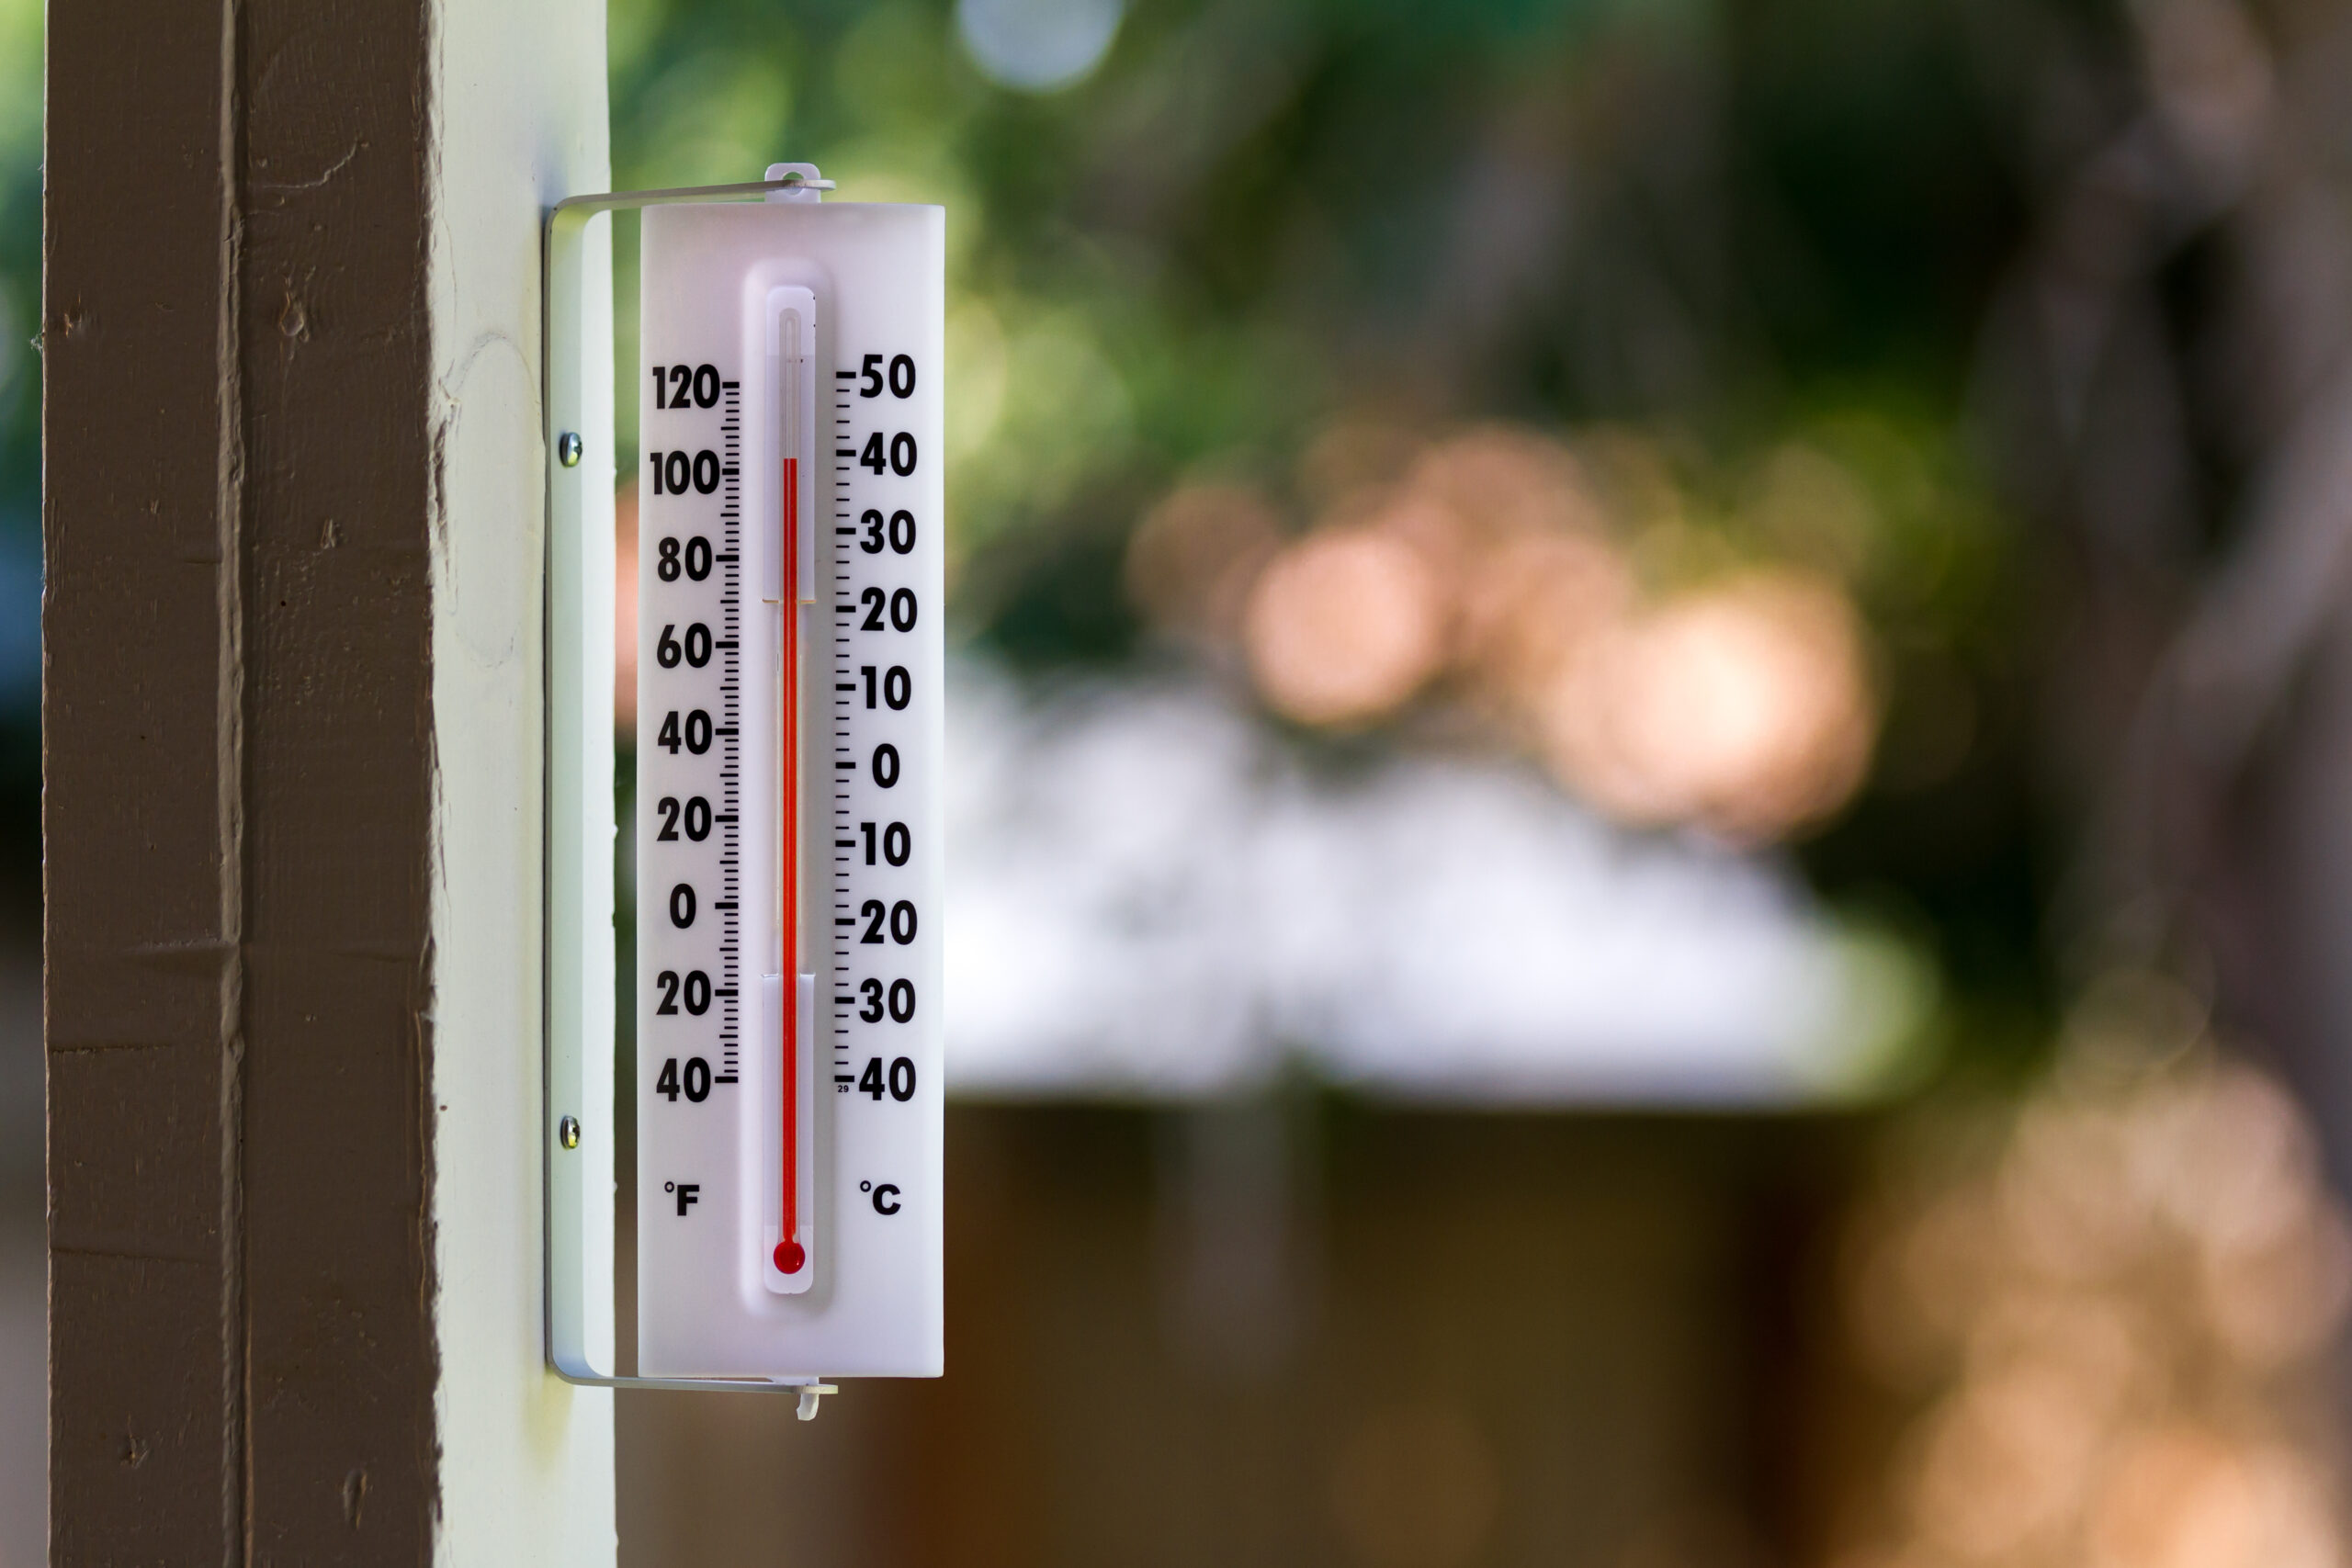 Temperature, Mensuration & Measurement